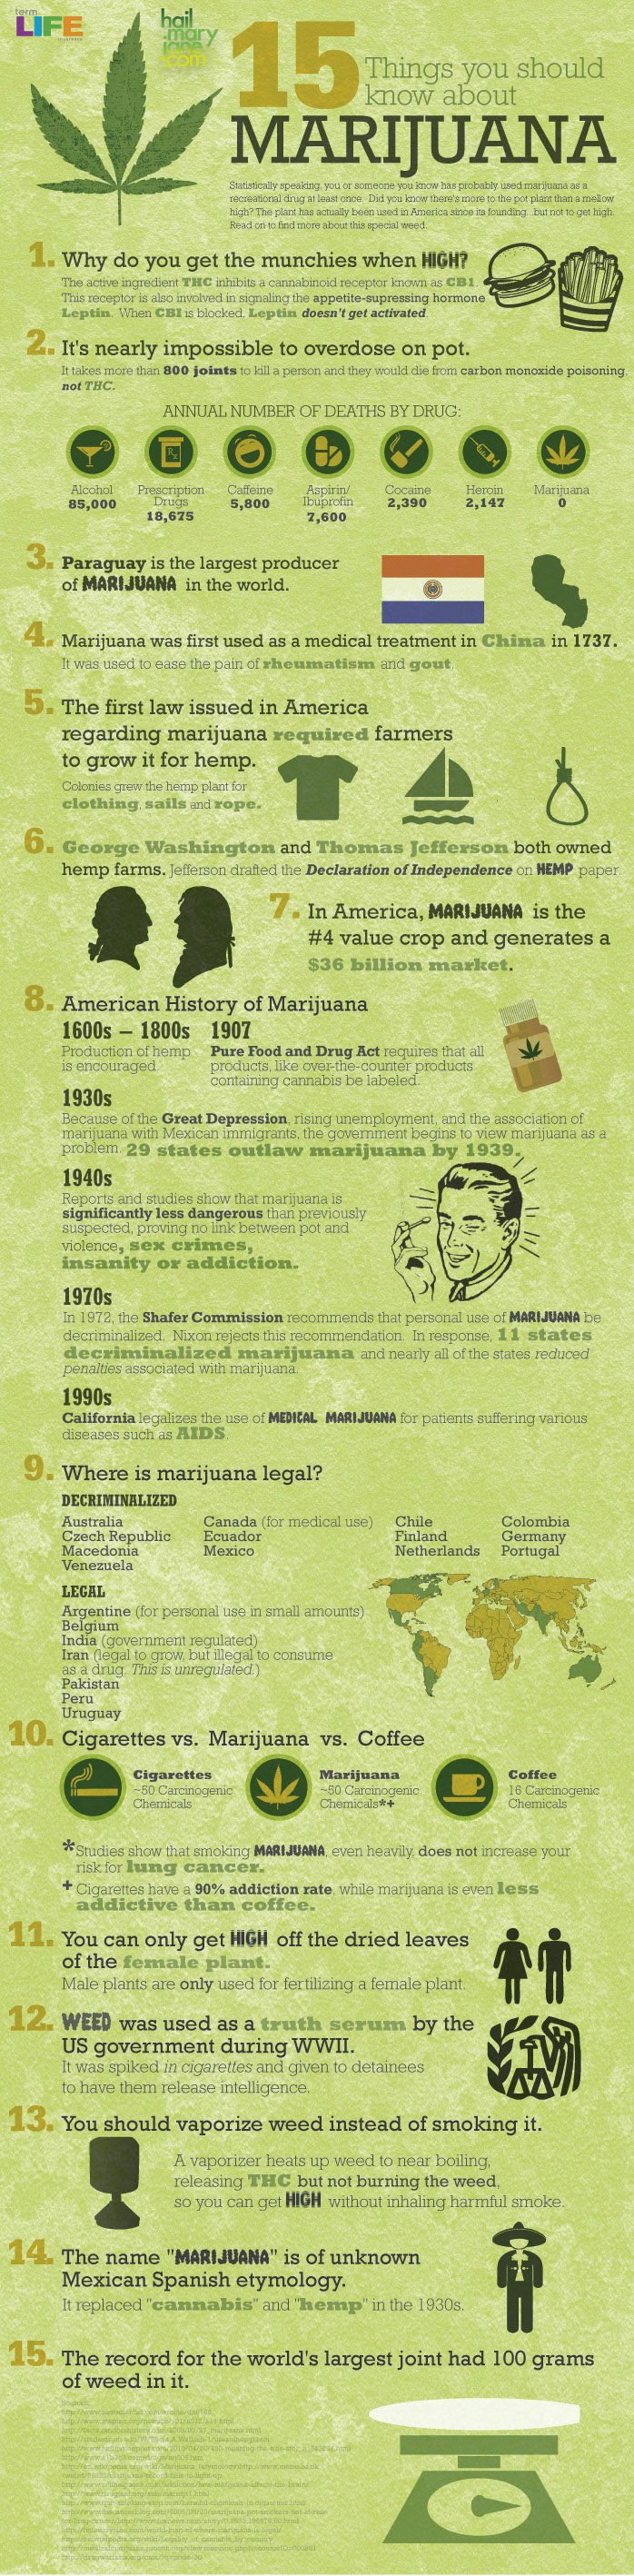 Marijuana facts. i lurb weed ;D<br /> funnyjunk.com